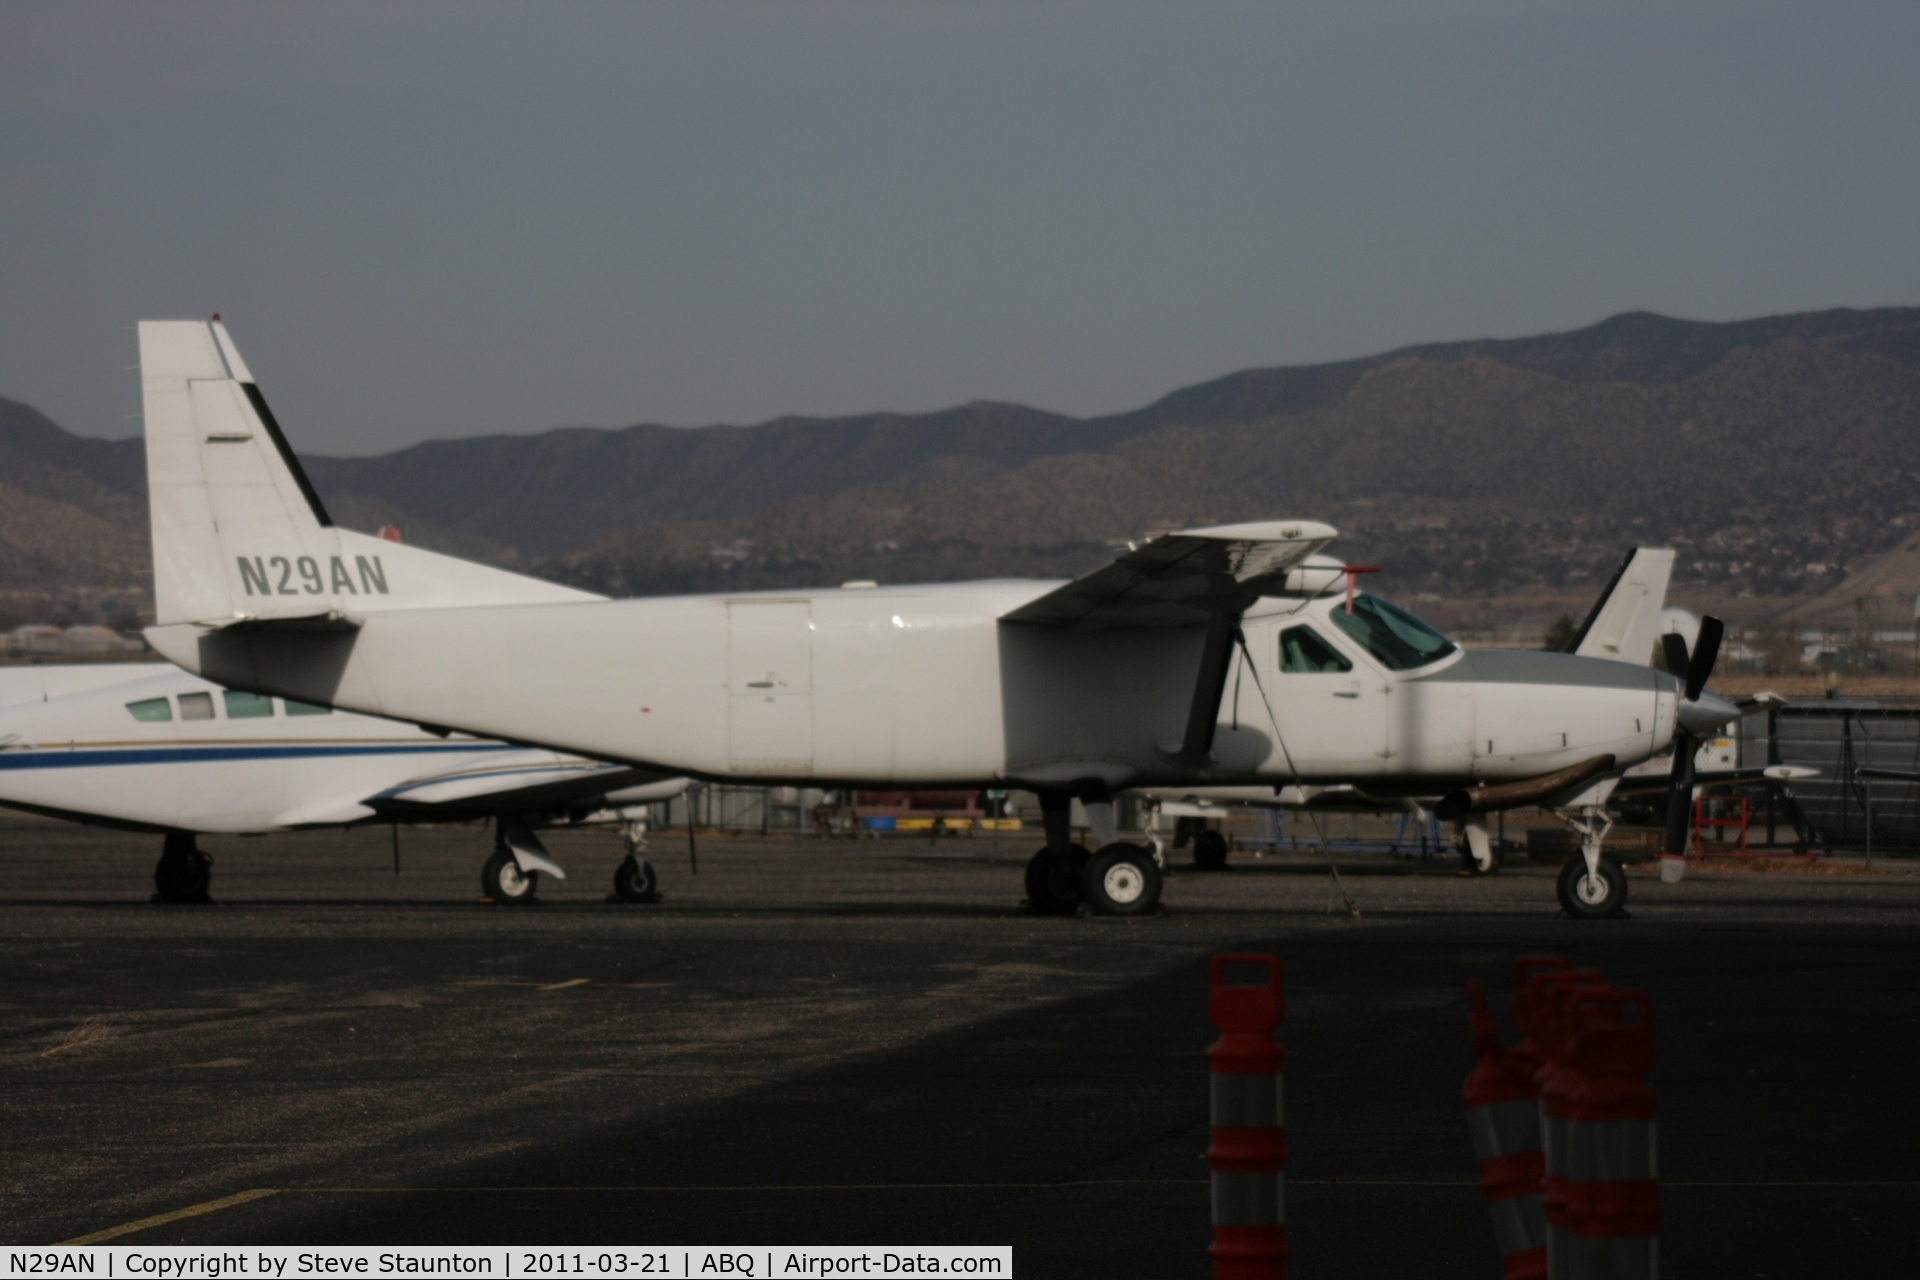 N29AN, 1999 Cessna 208B Grand Caravan C/N 208B0753, Taken at Alburquerque International Sunport Airport, New Mexico in March 2011 whilst on an Aeroprint Aviation tour